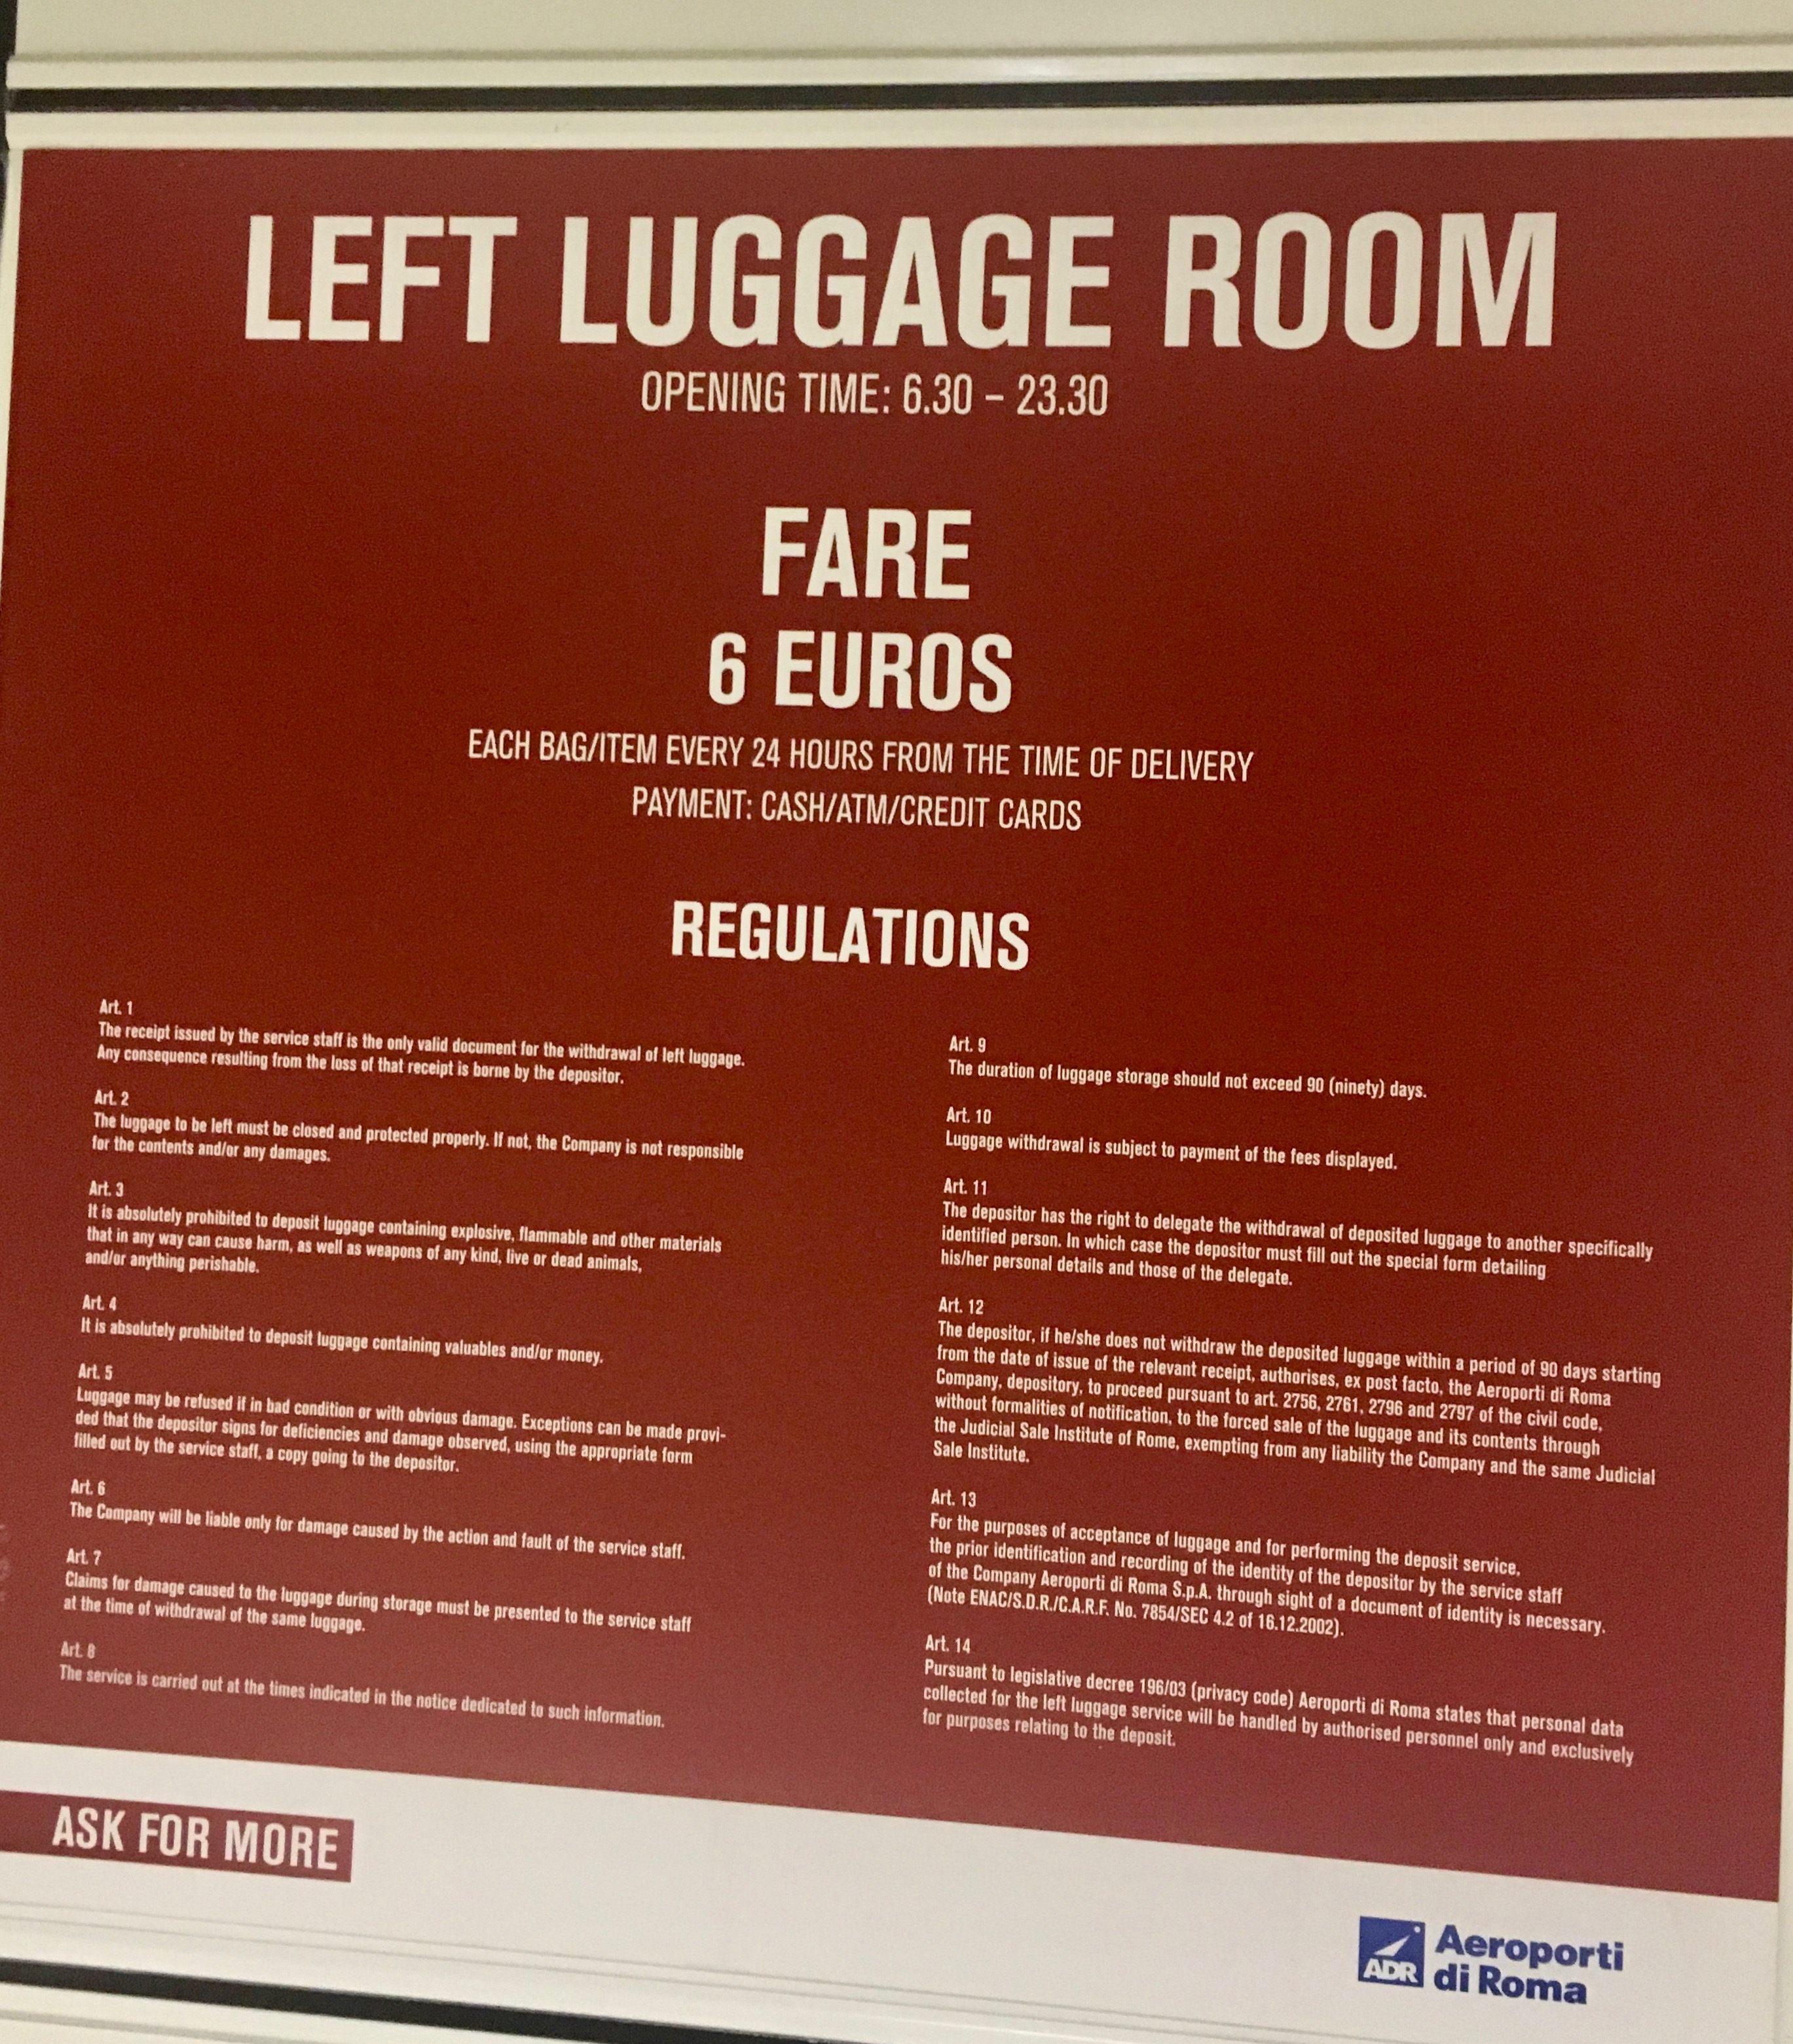 Luggage Storage Rome Airport Regulations. Left Luggage. go4theglobe